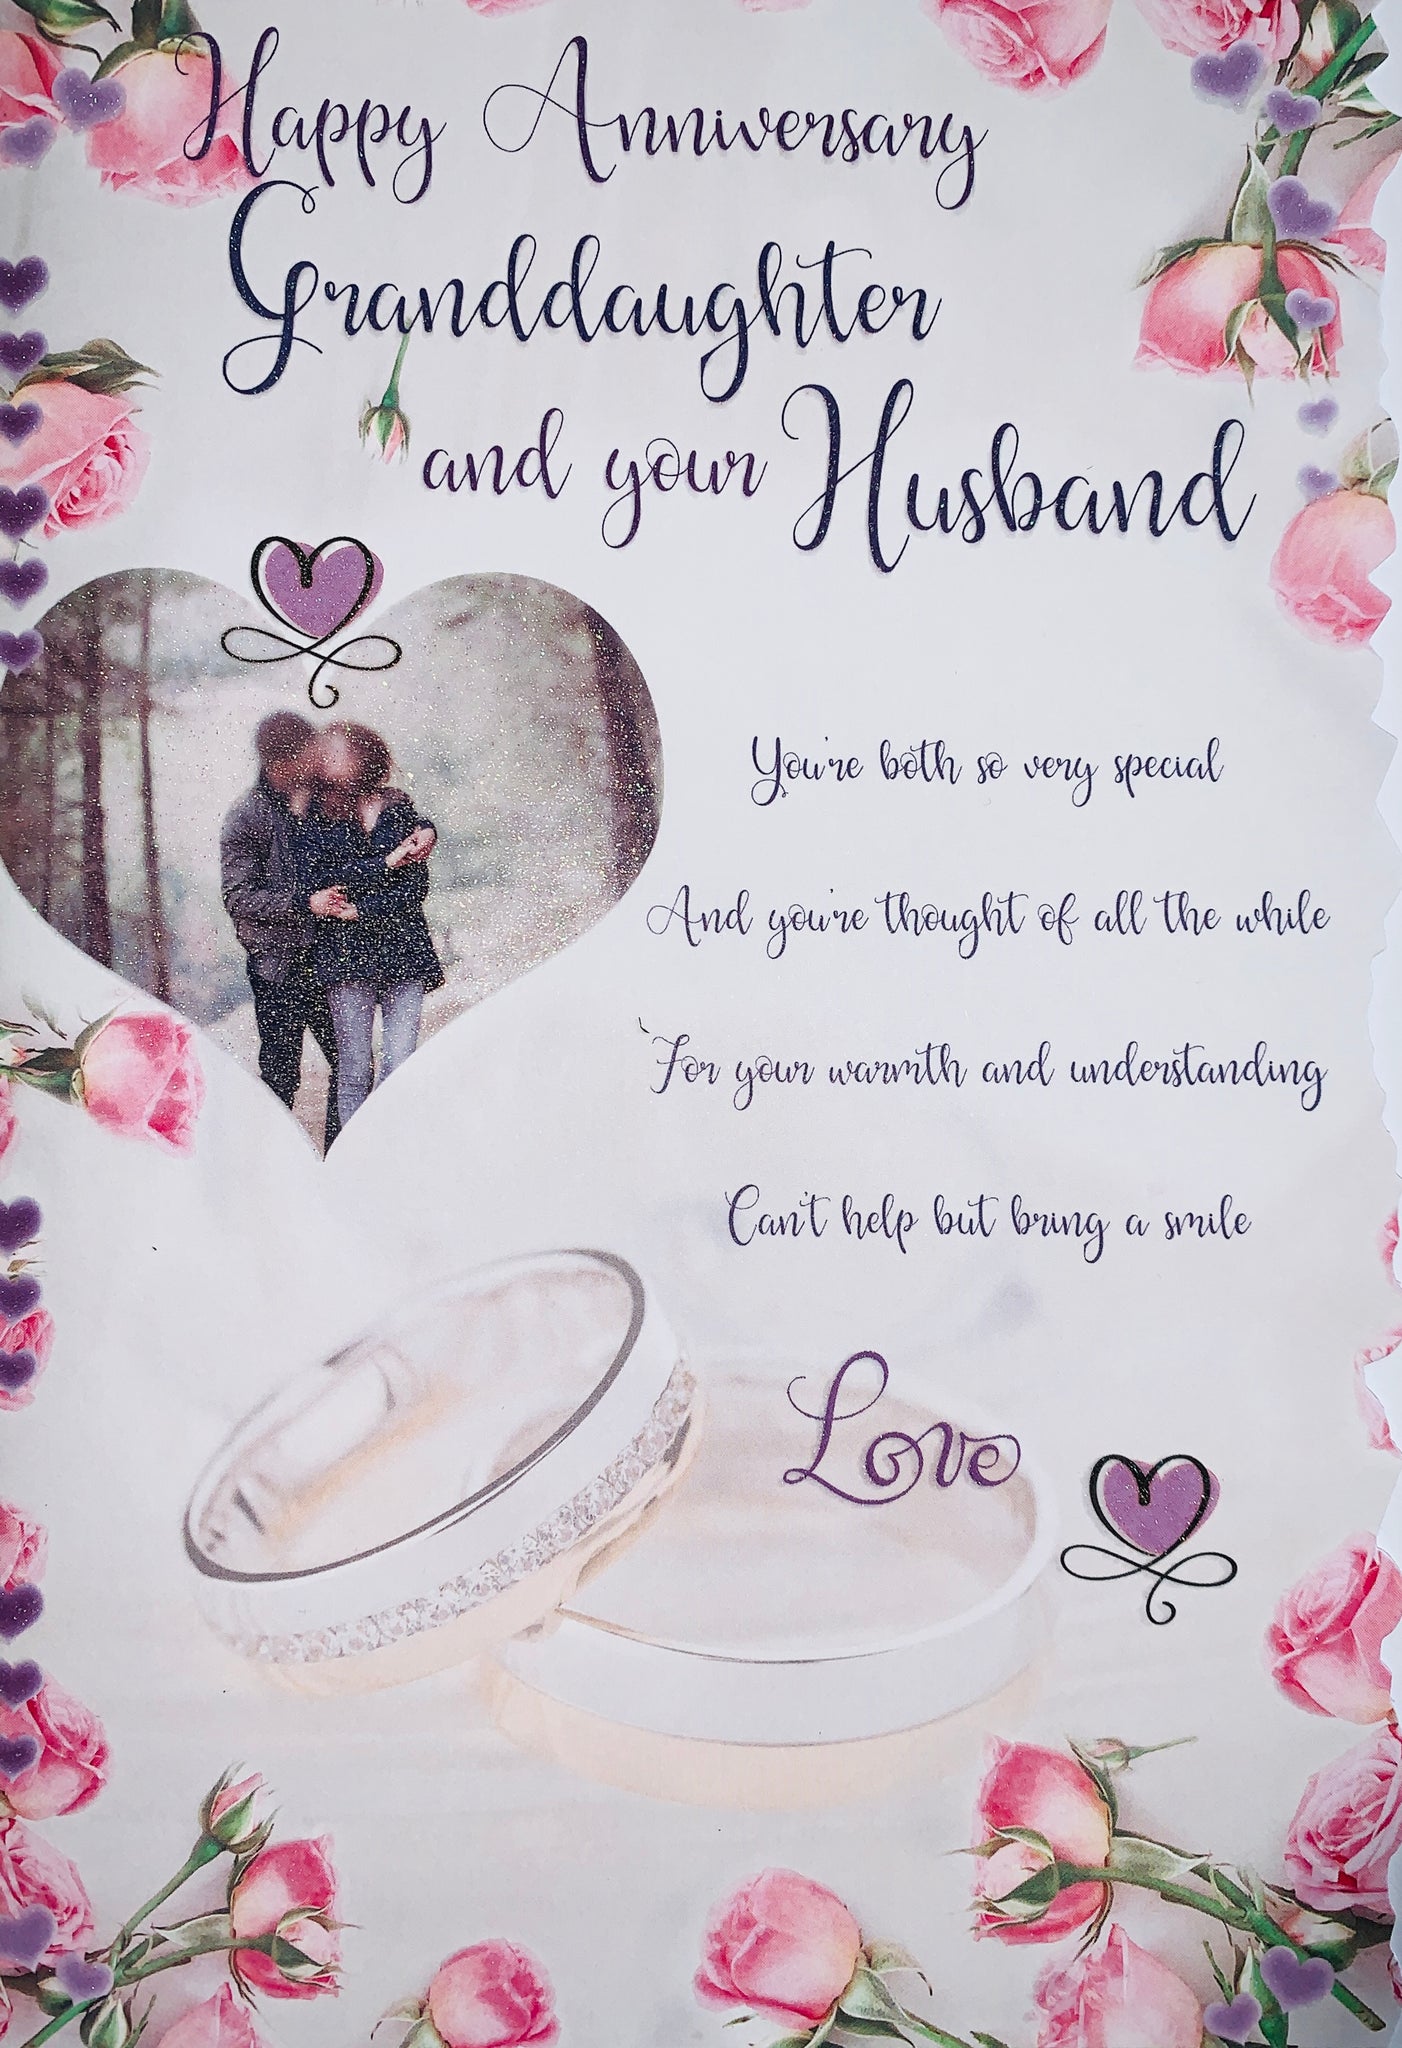 Granddaughter and Husband anniversary card- long verse